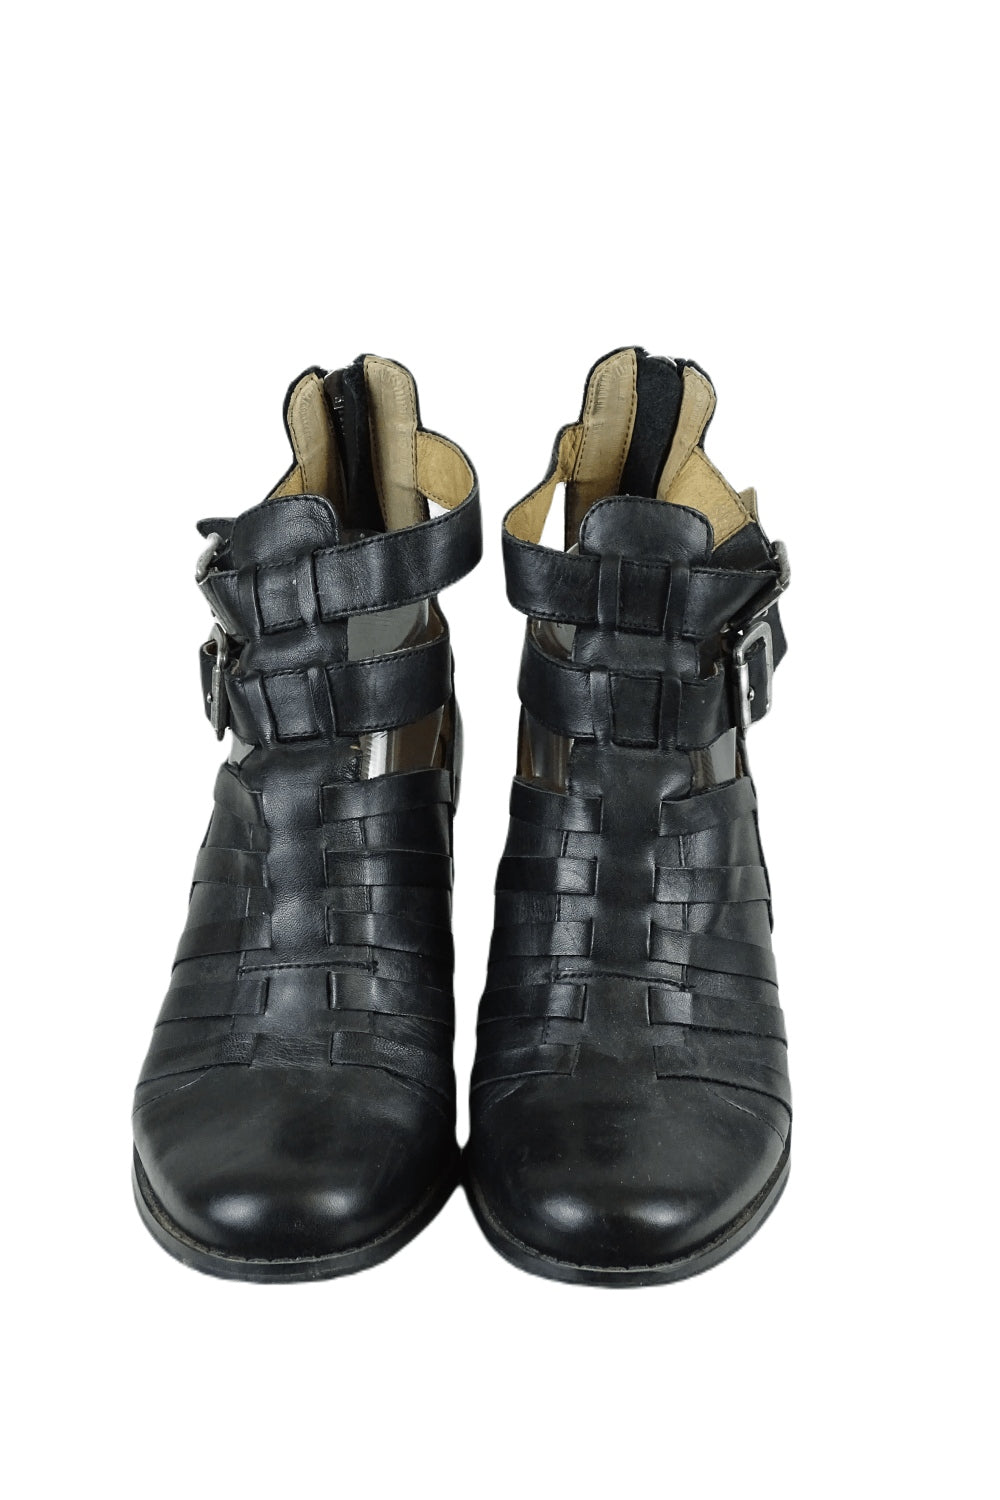 Wittner Black Sandals Boots 38